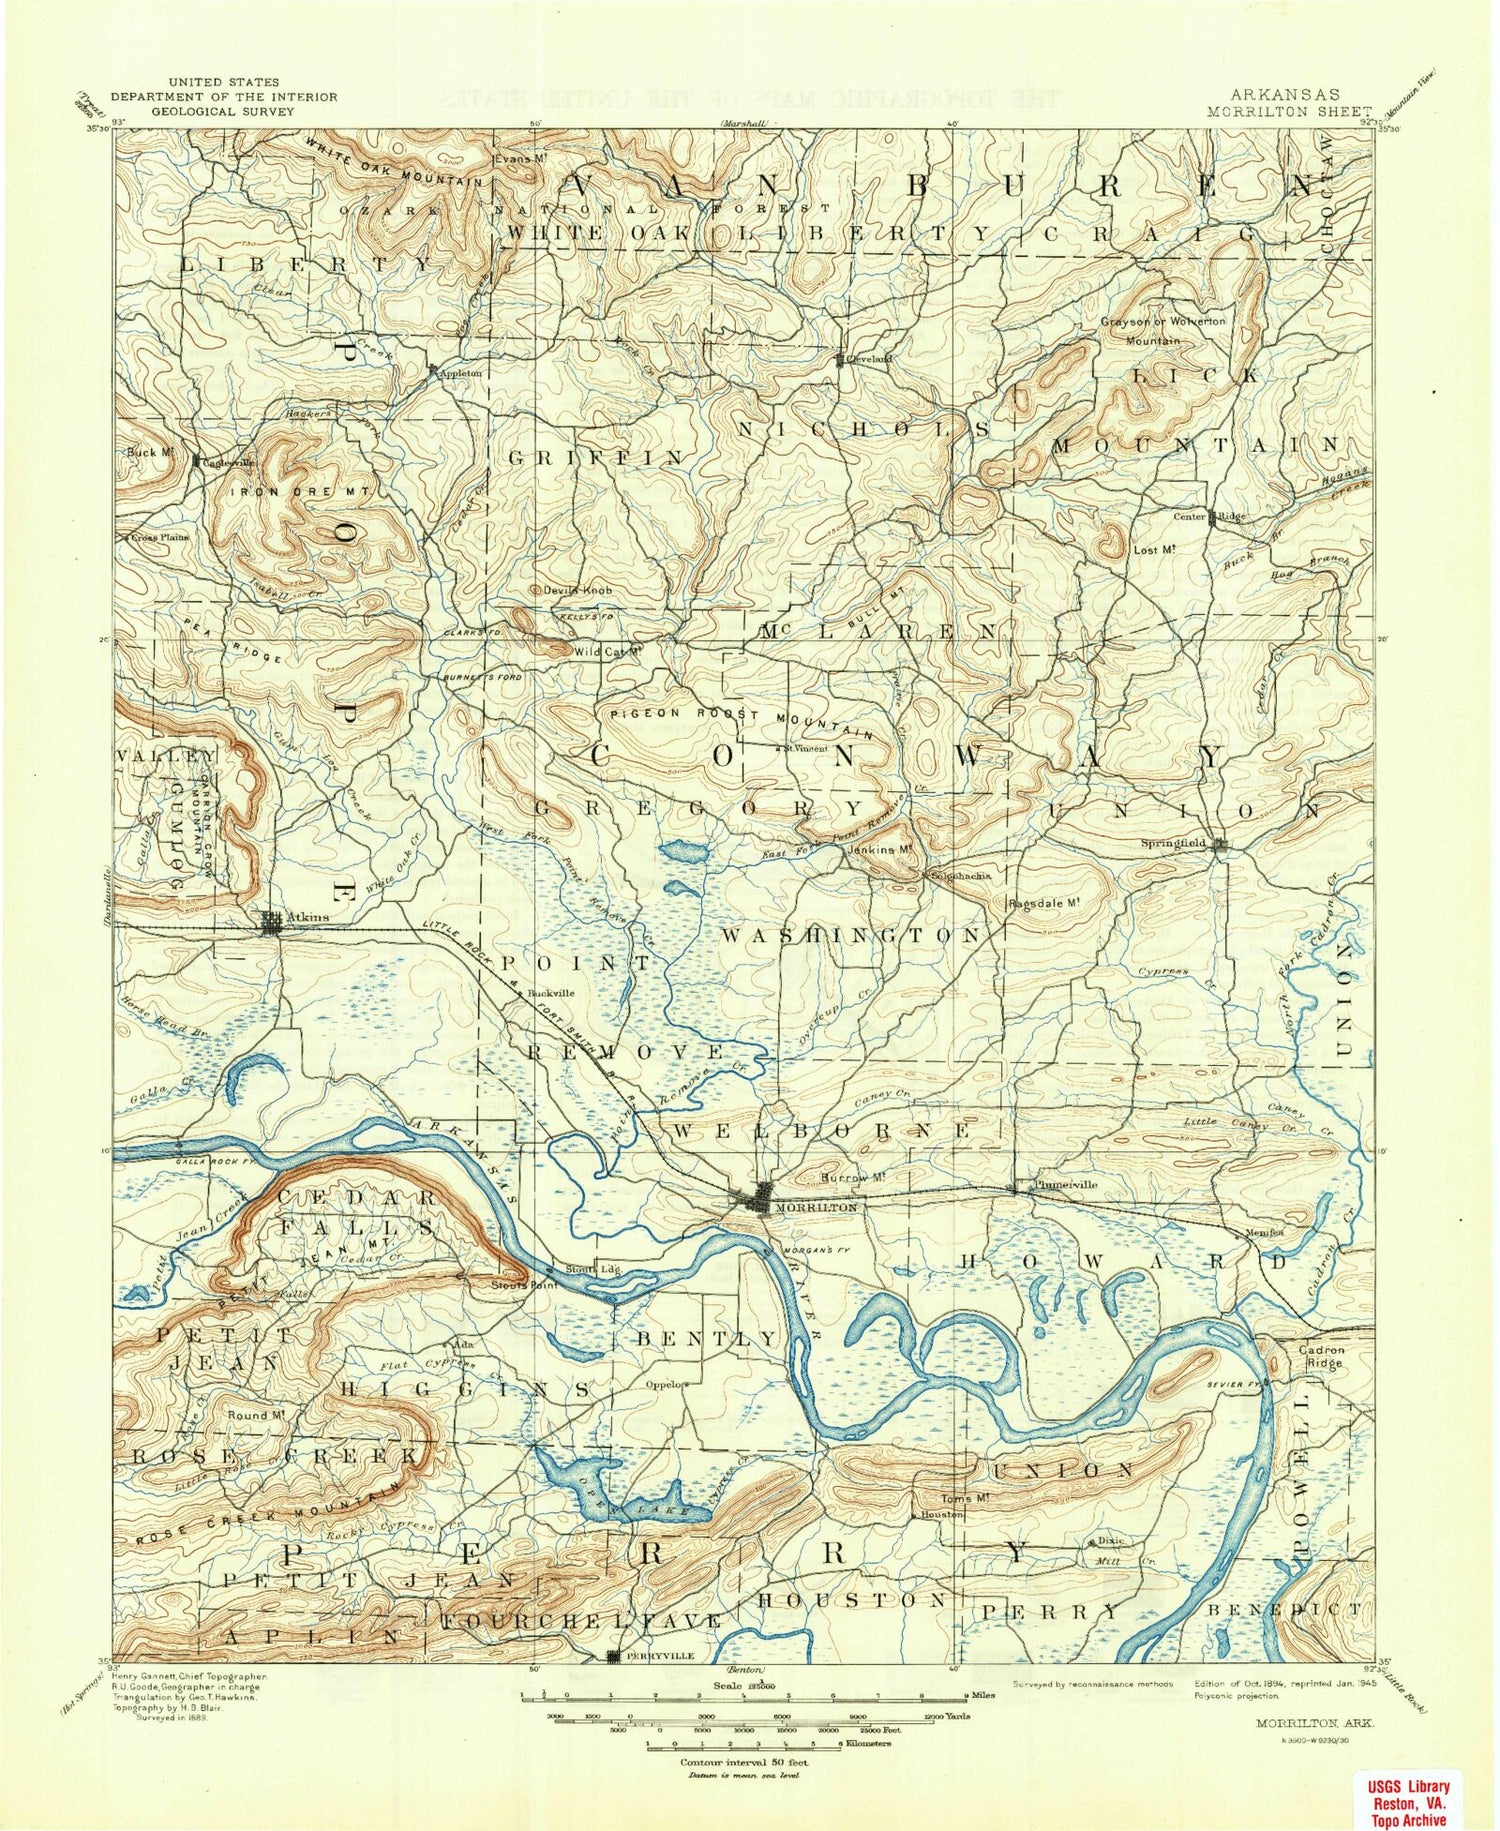 Historic 1894 Morrilton Arkansas 30'x30' Topo Map Image